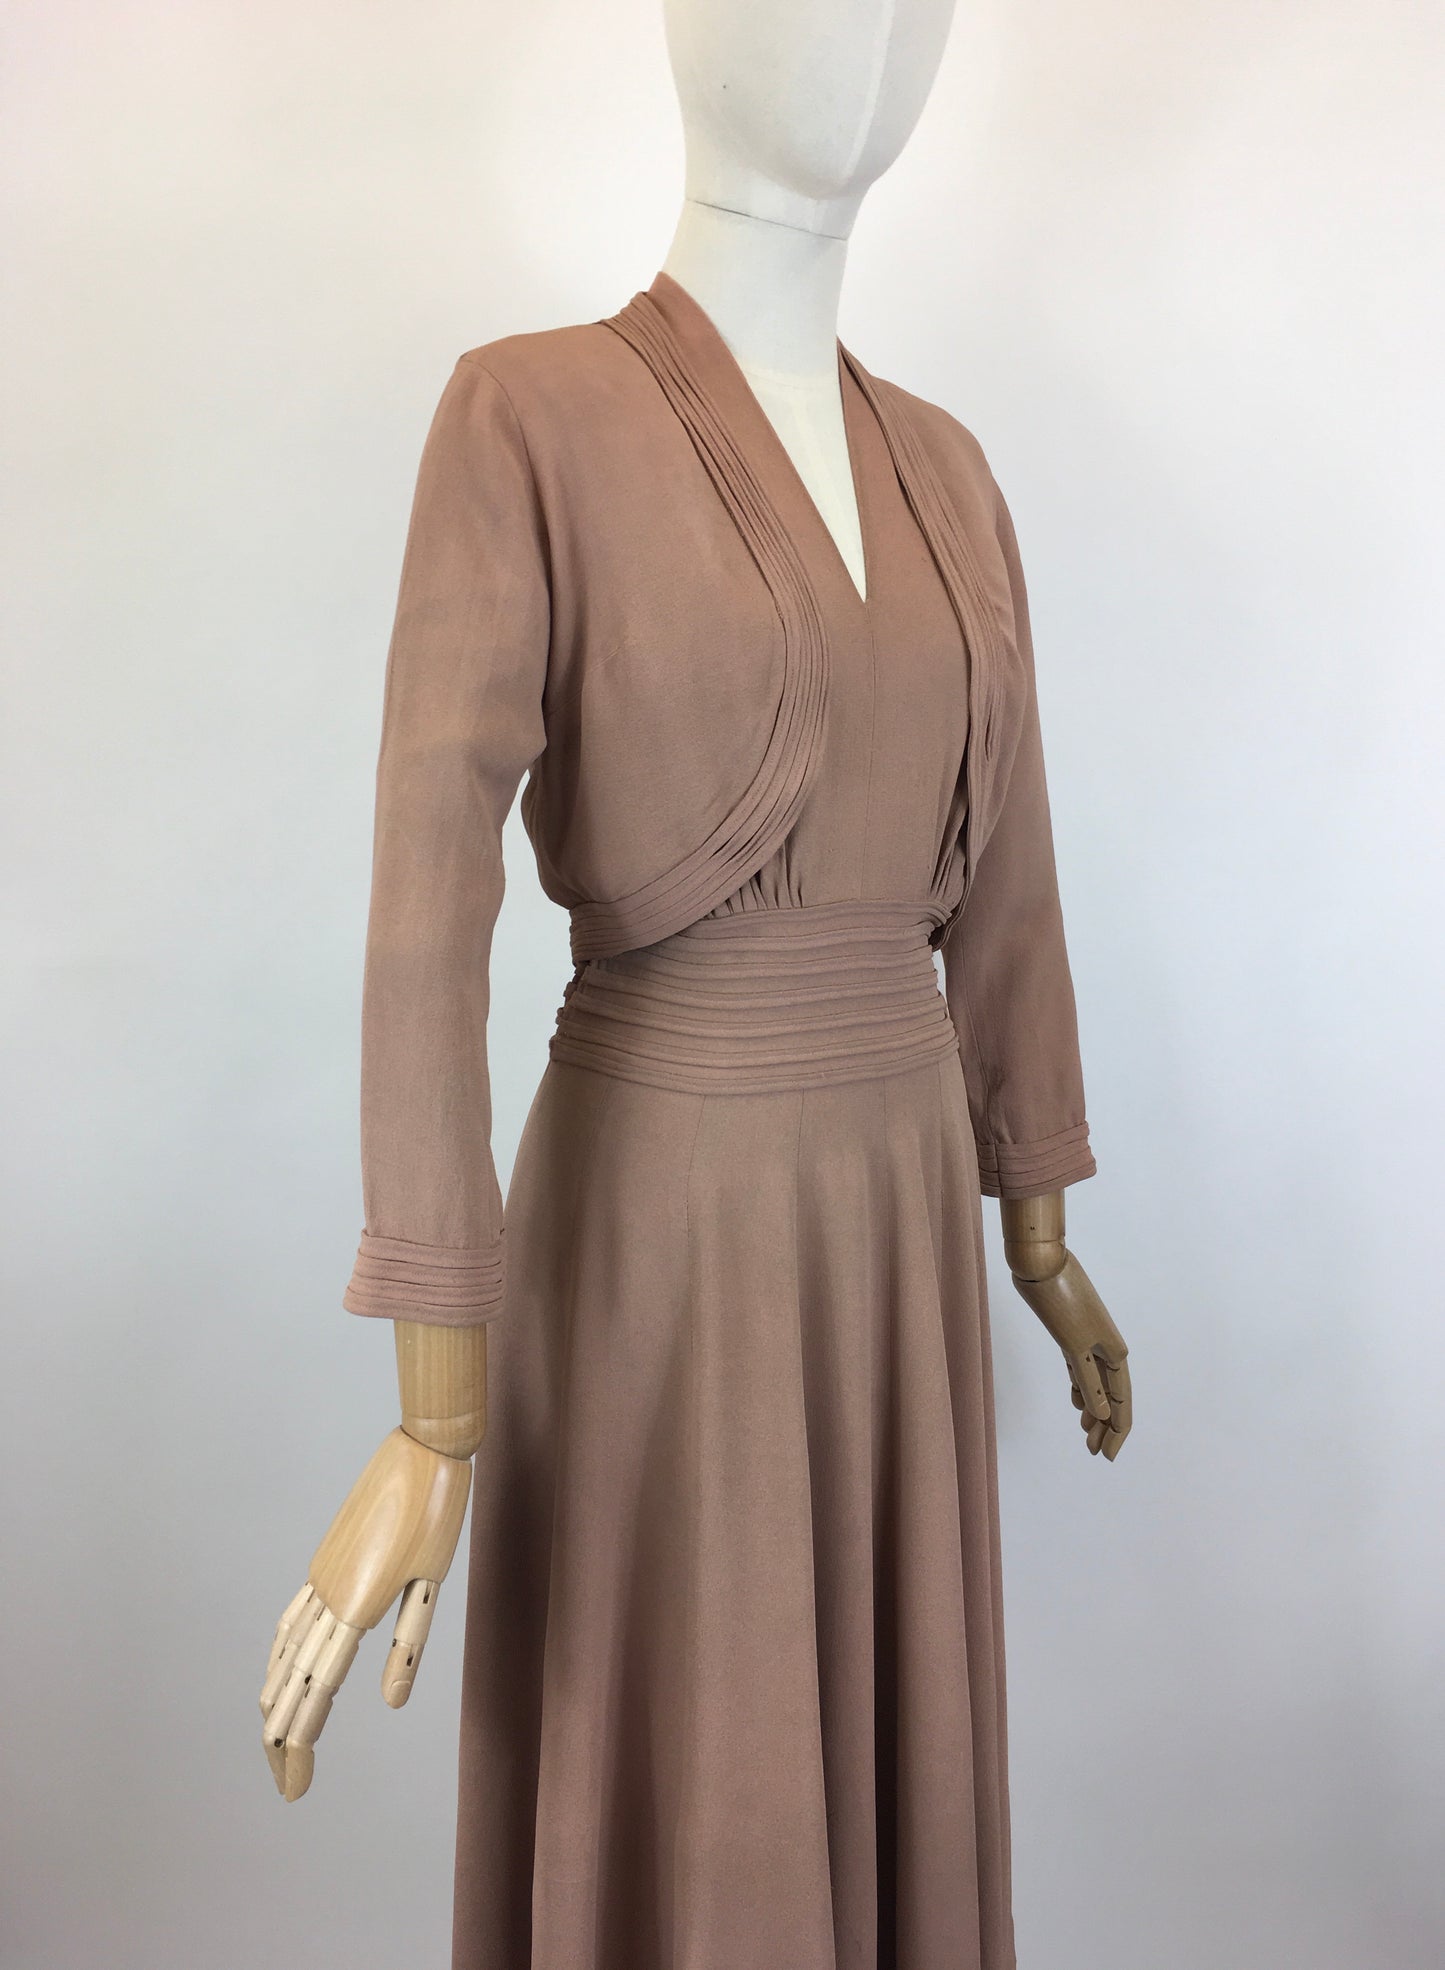 Original 1940’s Stunning Crepe Dress with Matching Bolero - In Powdered Rose